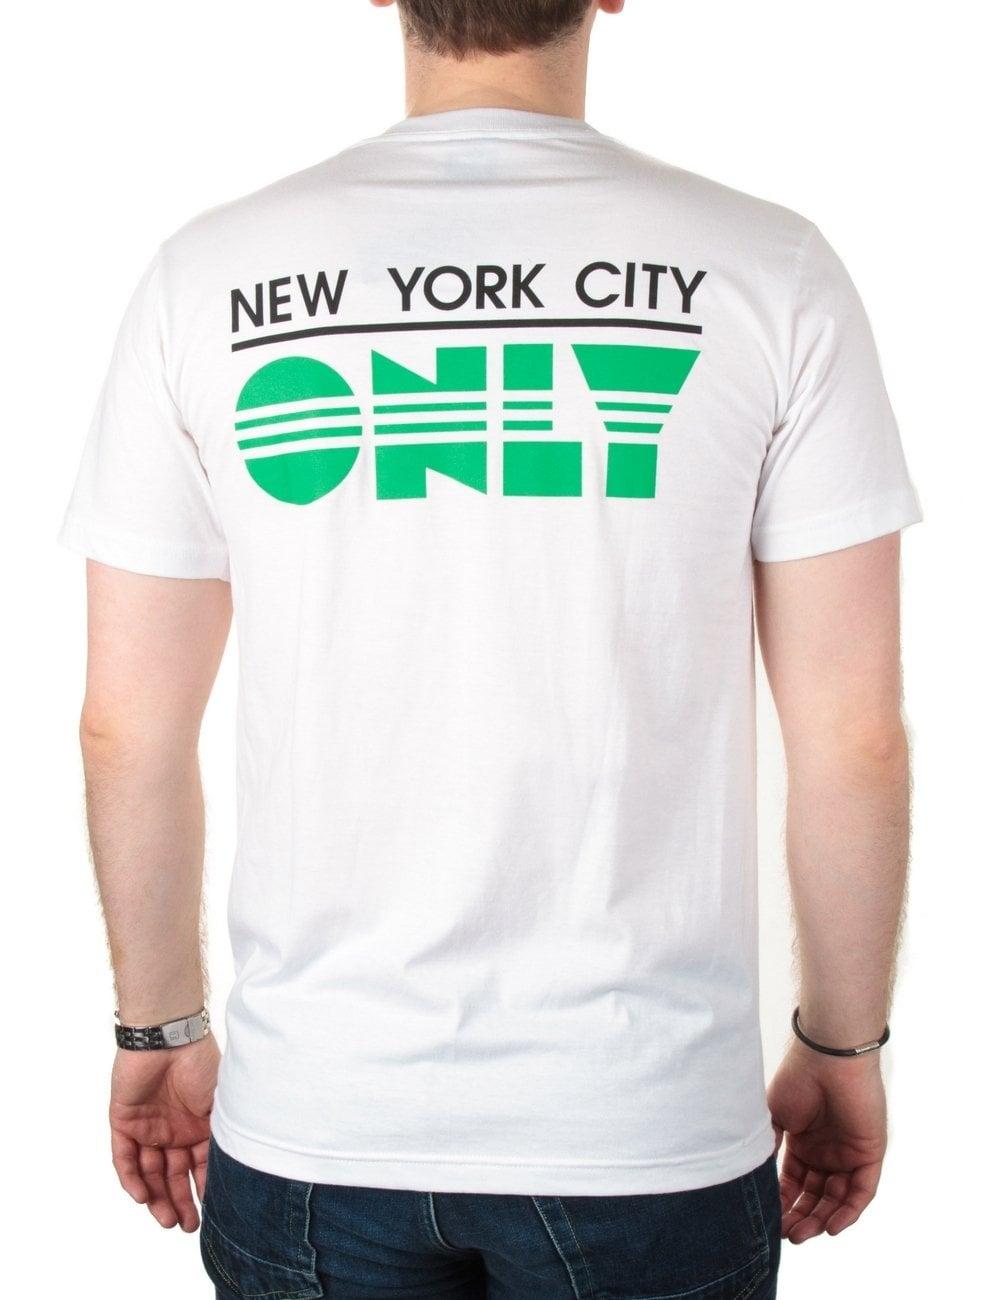 New York City Dot Logo - Only NY Clothing Dot Tee - White - Only NY Clothing from iConsume UK